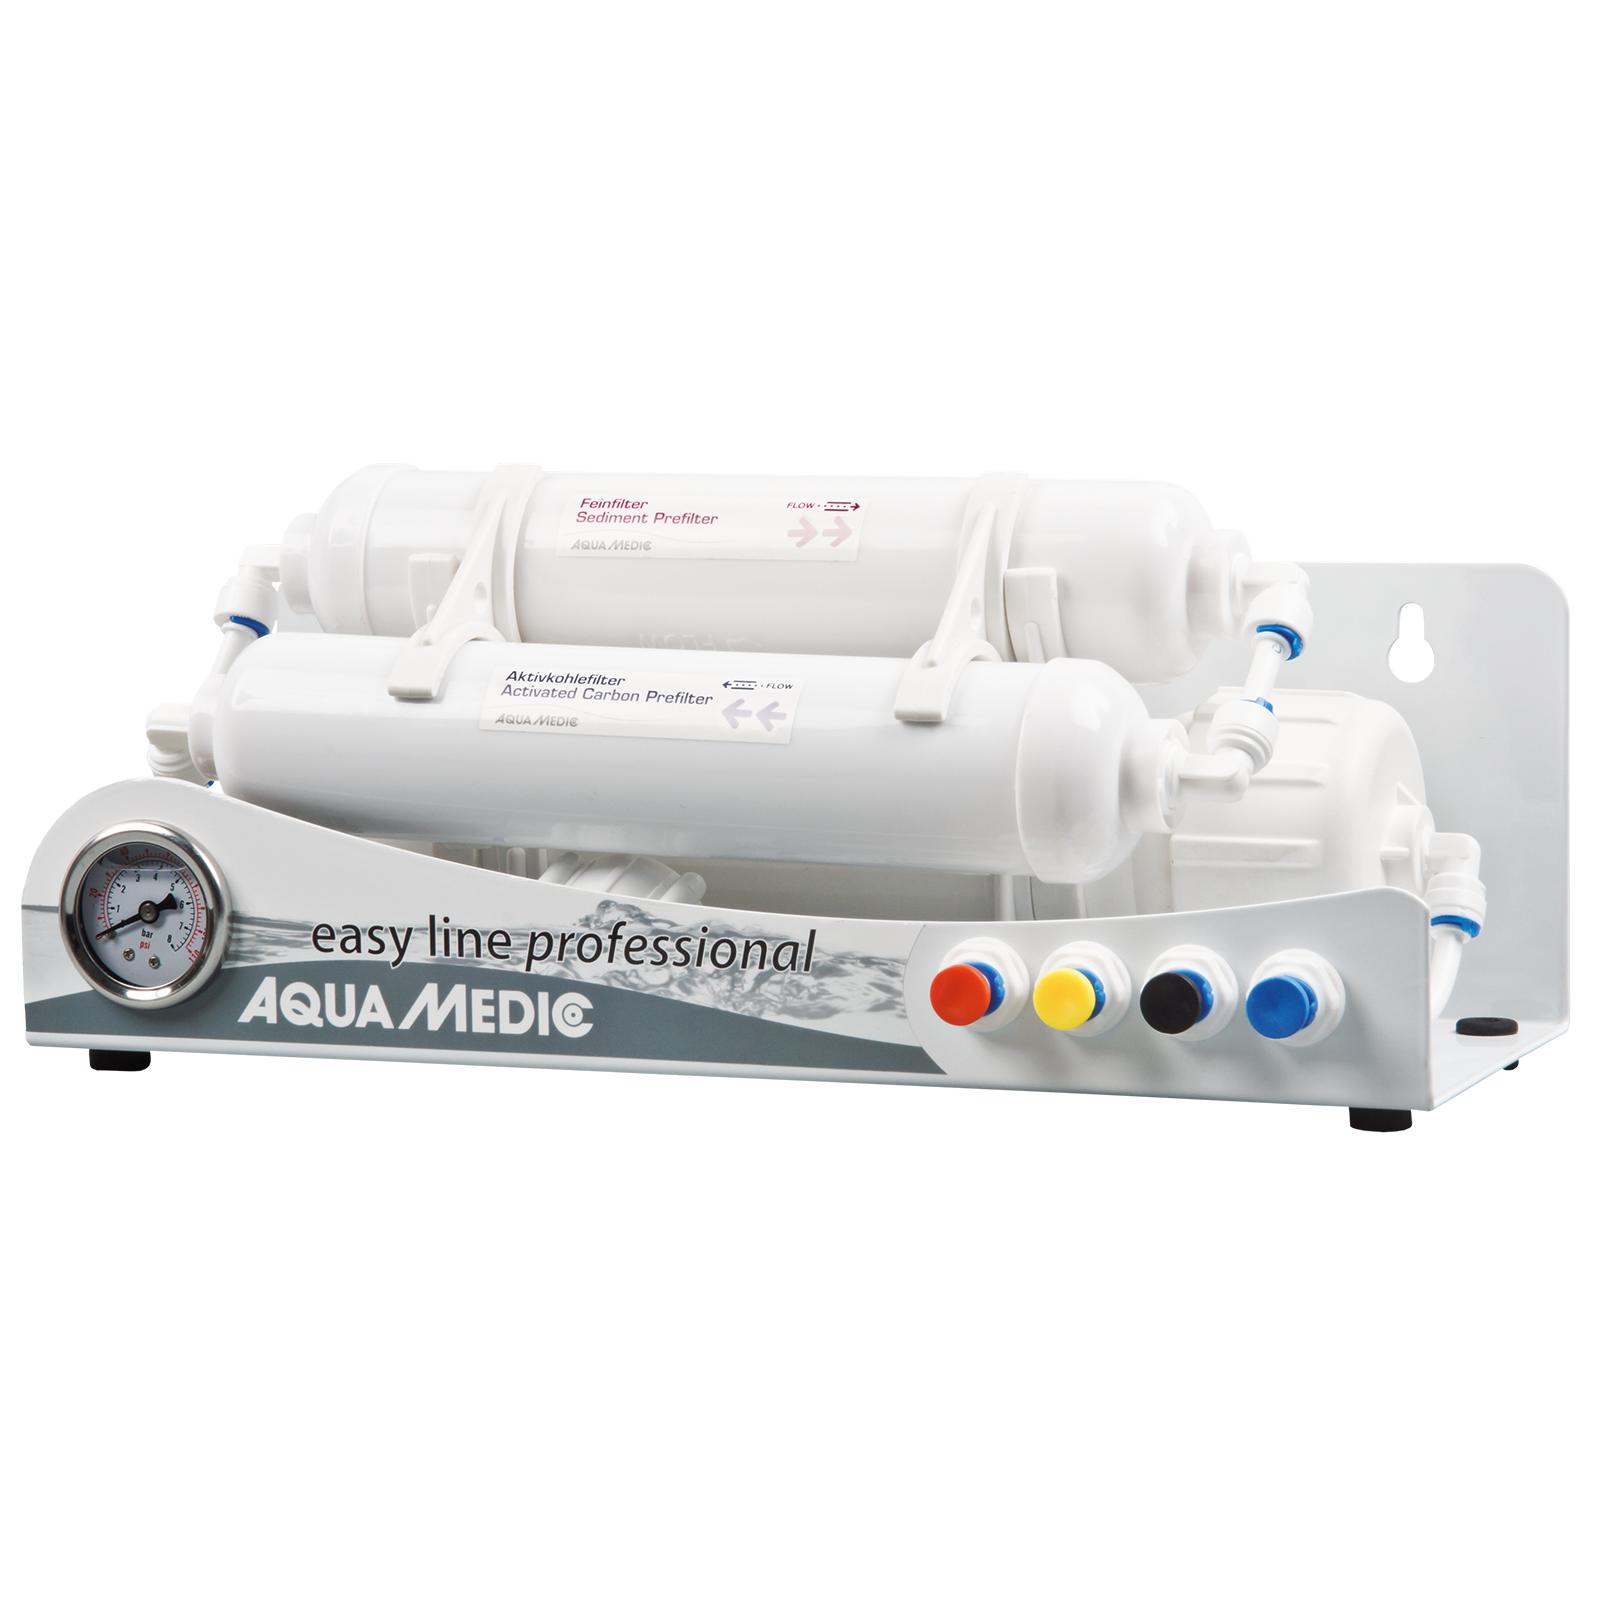 Aqua Medic easy line professional